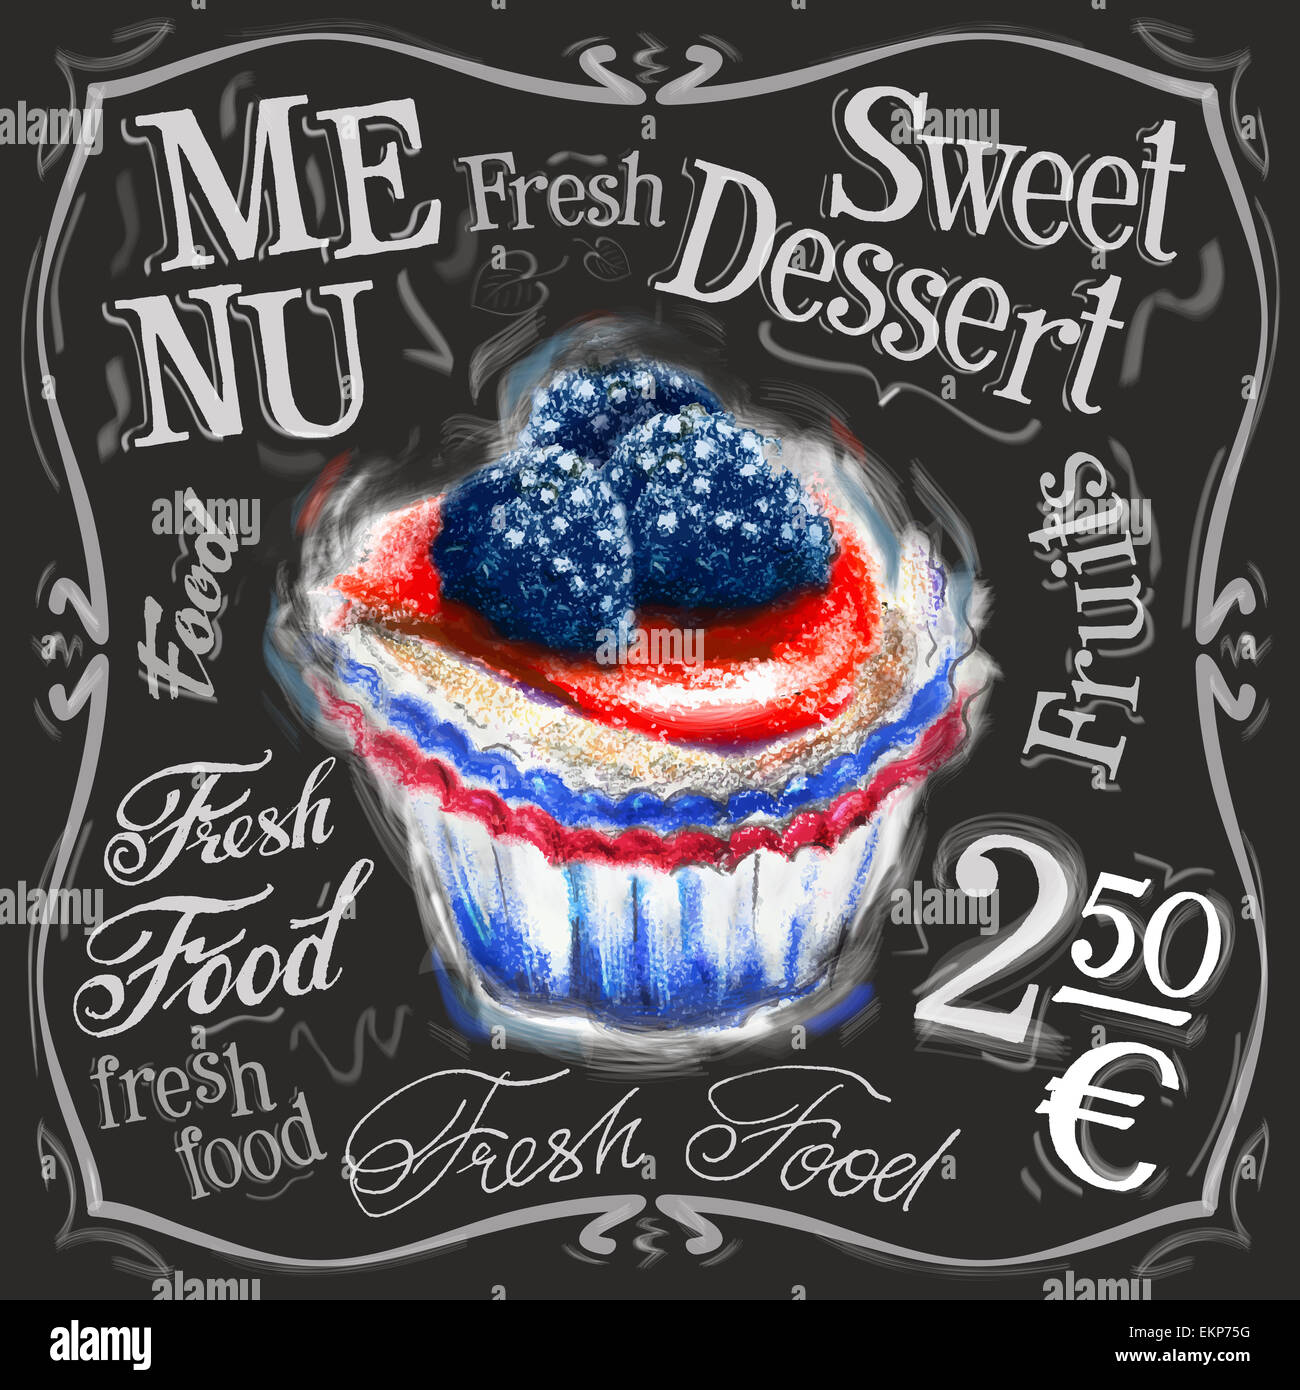 sweet dessert vector logo design template. fresh cake, food or menu board icon. Stock Photo